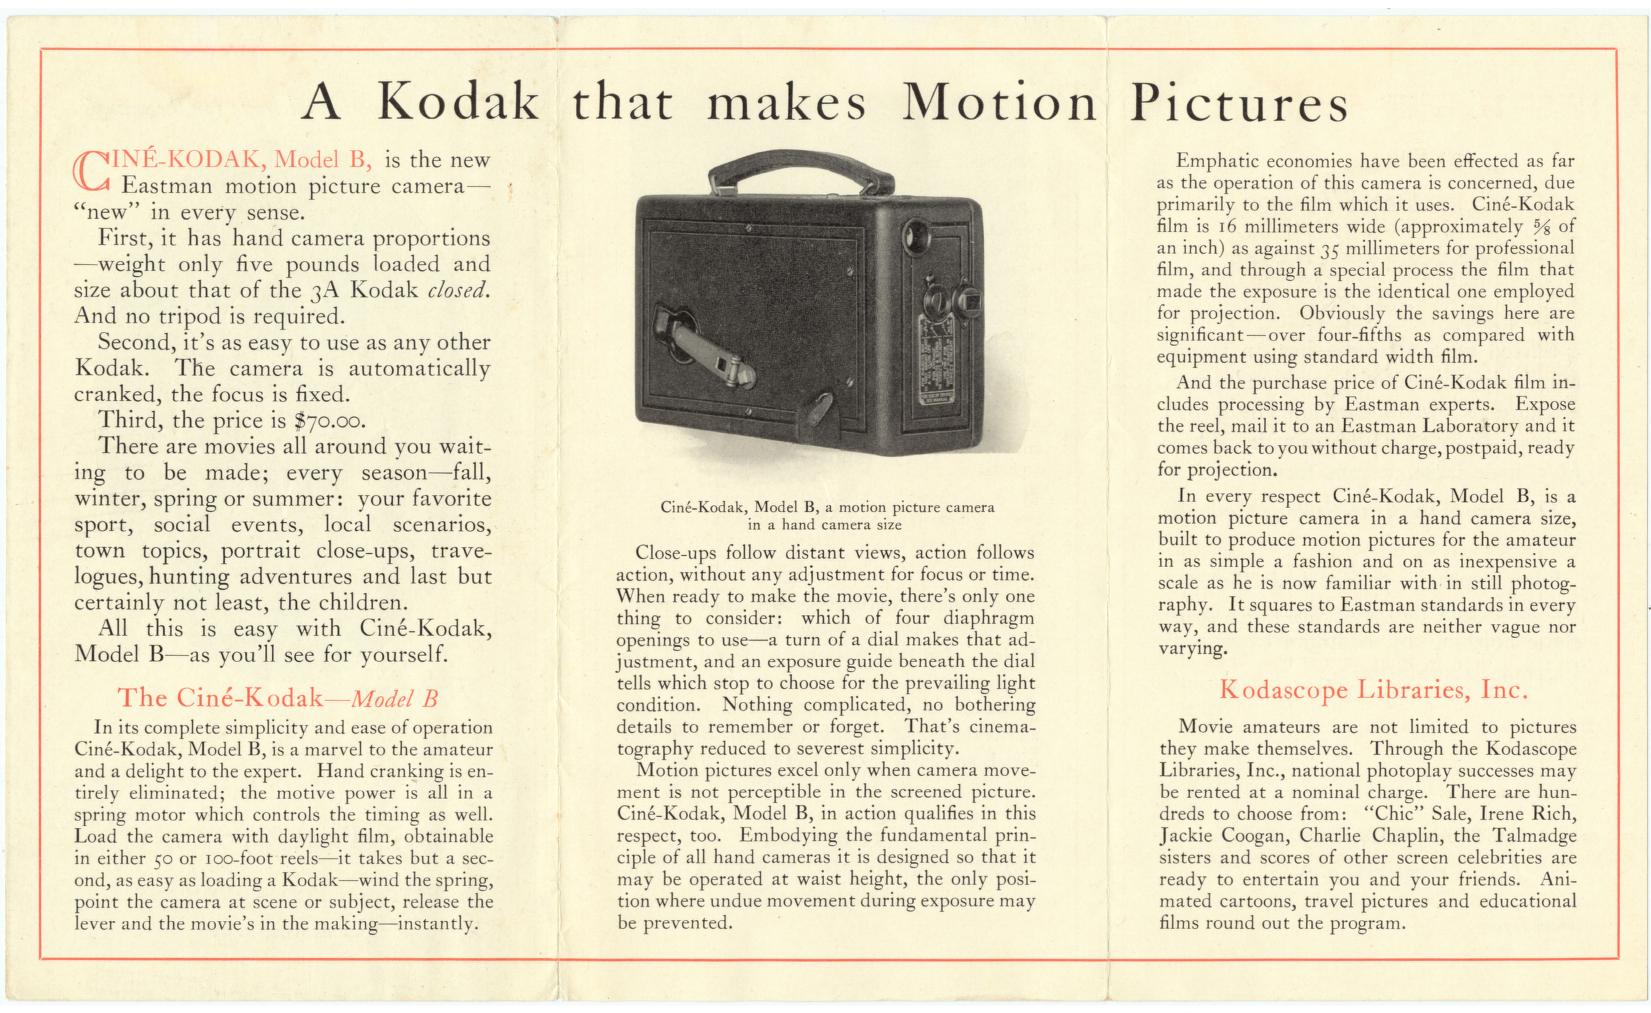 Cine-Kodak Model B pamphlet dated October 1, 1925